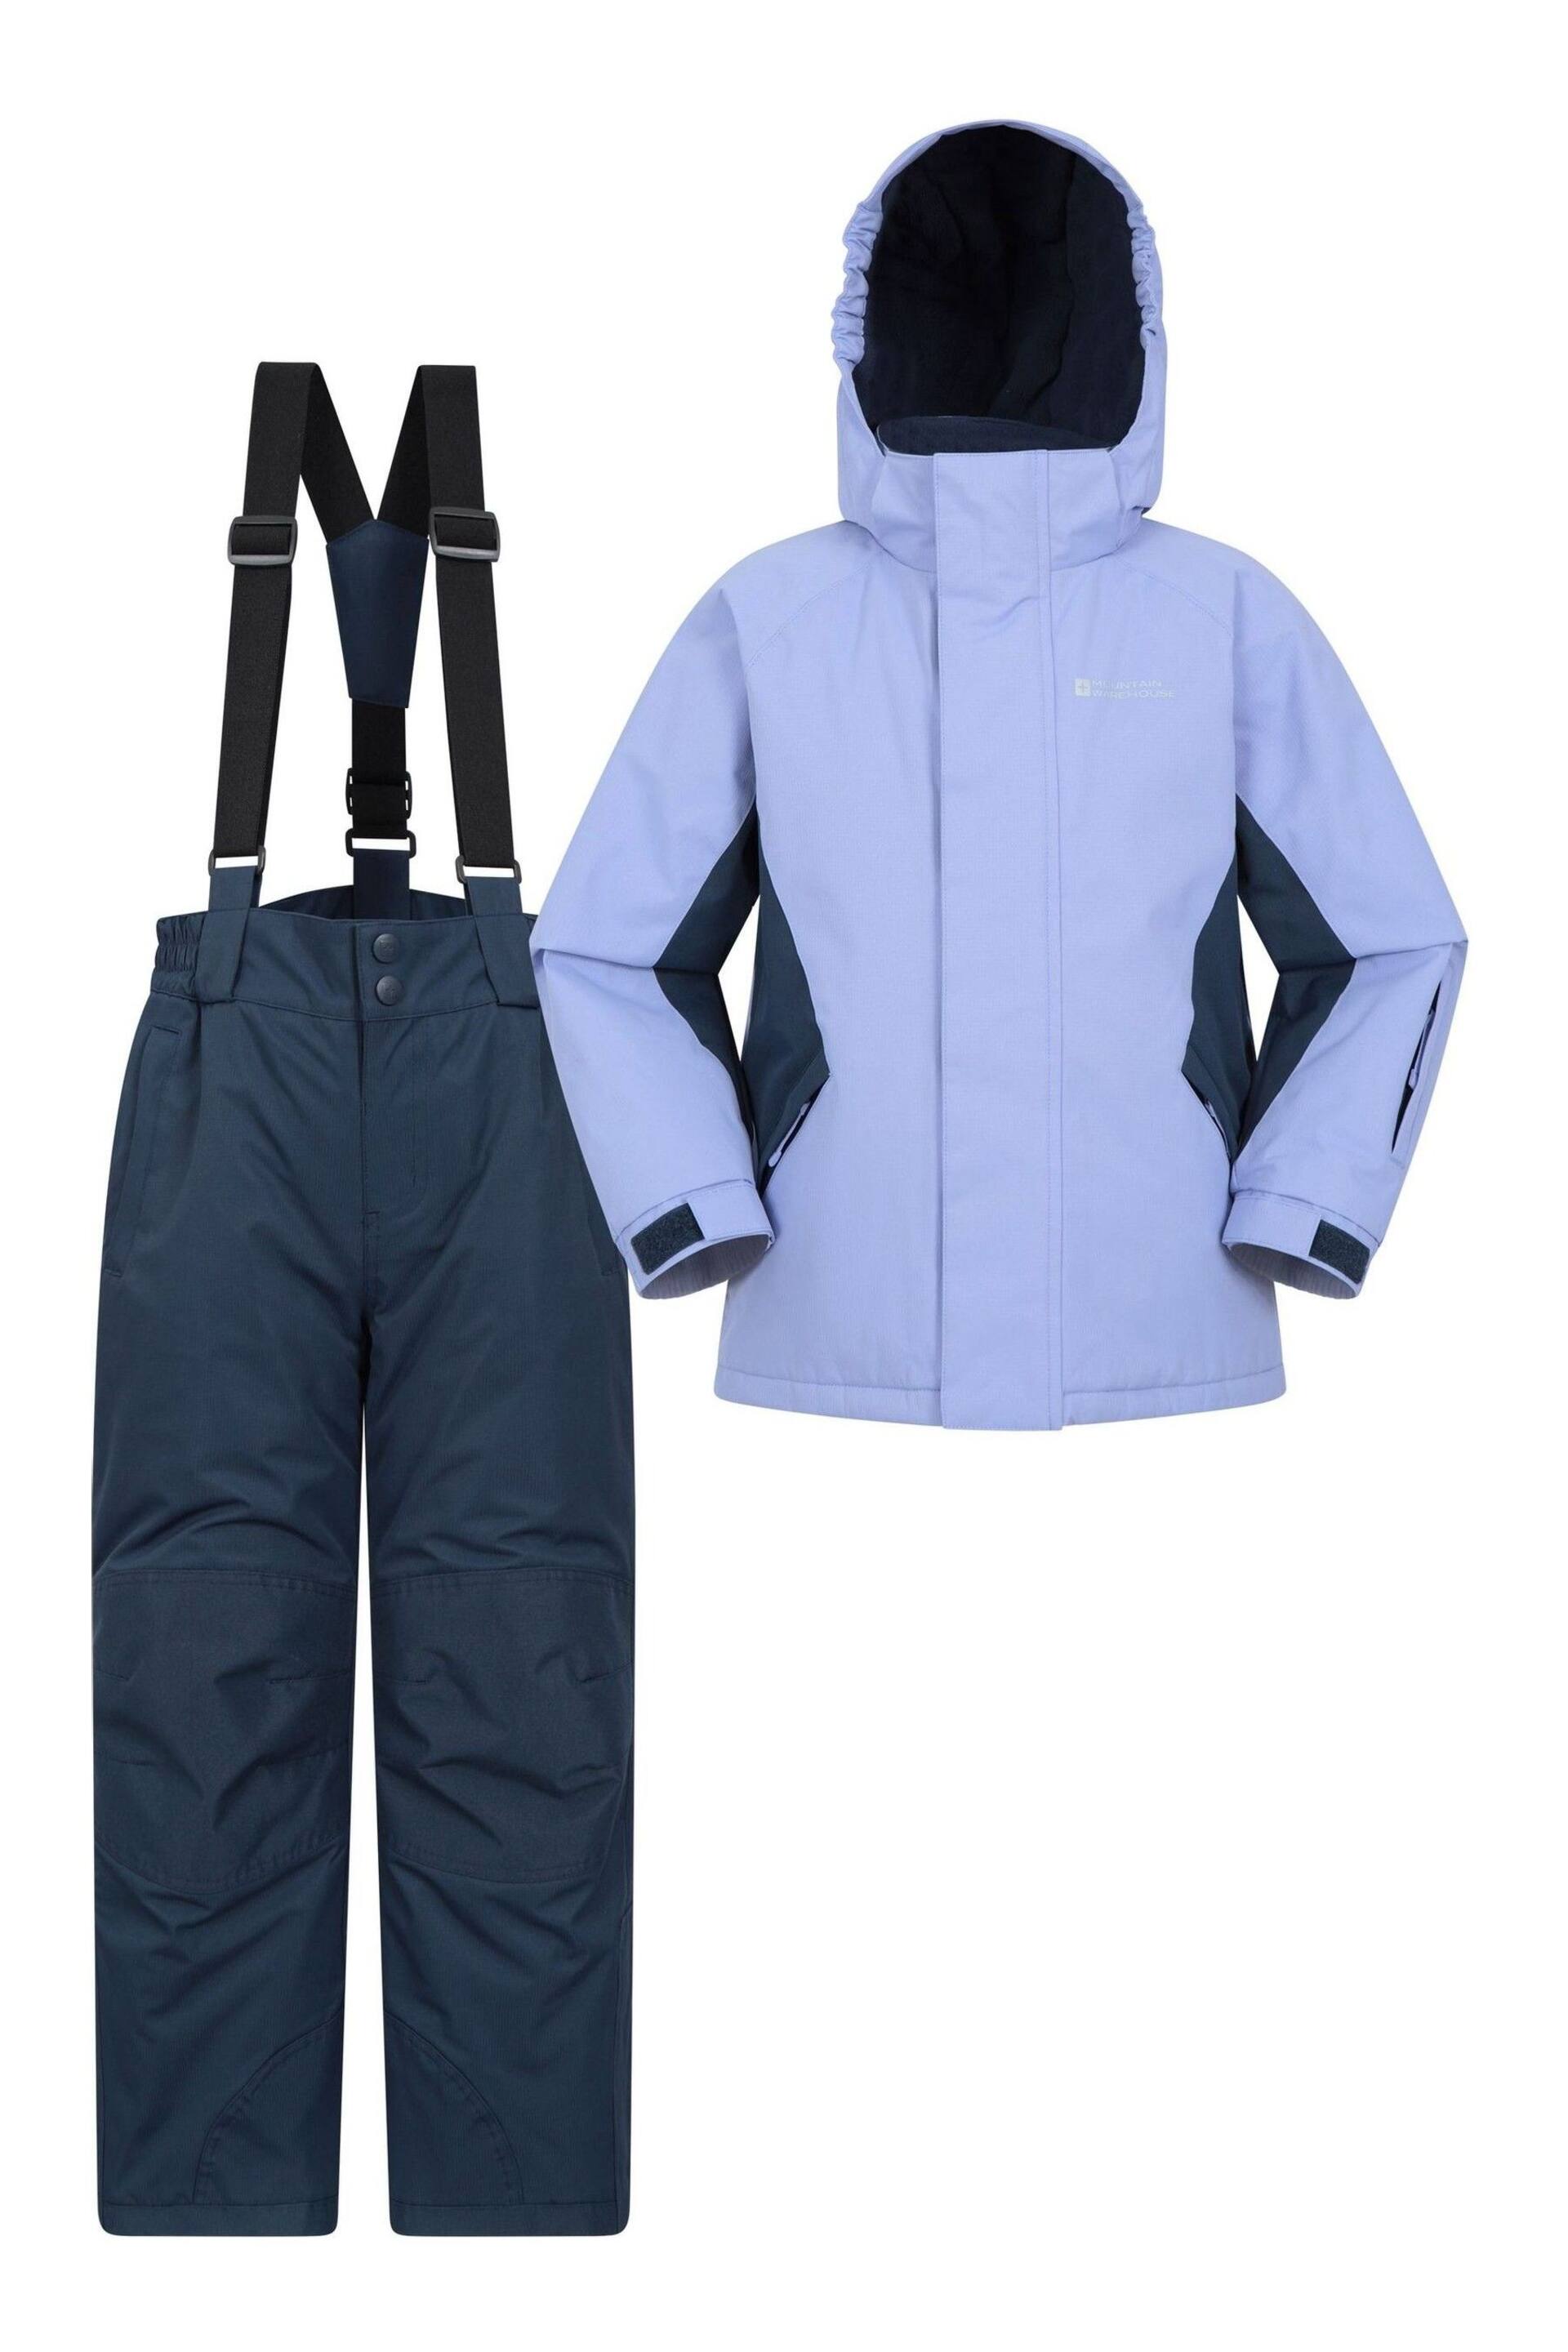 Mountain Warehouse Purple Kids Fleece Lined Ski Jacket And Joggers Set - Image 1 of 5